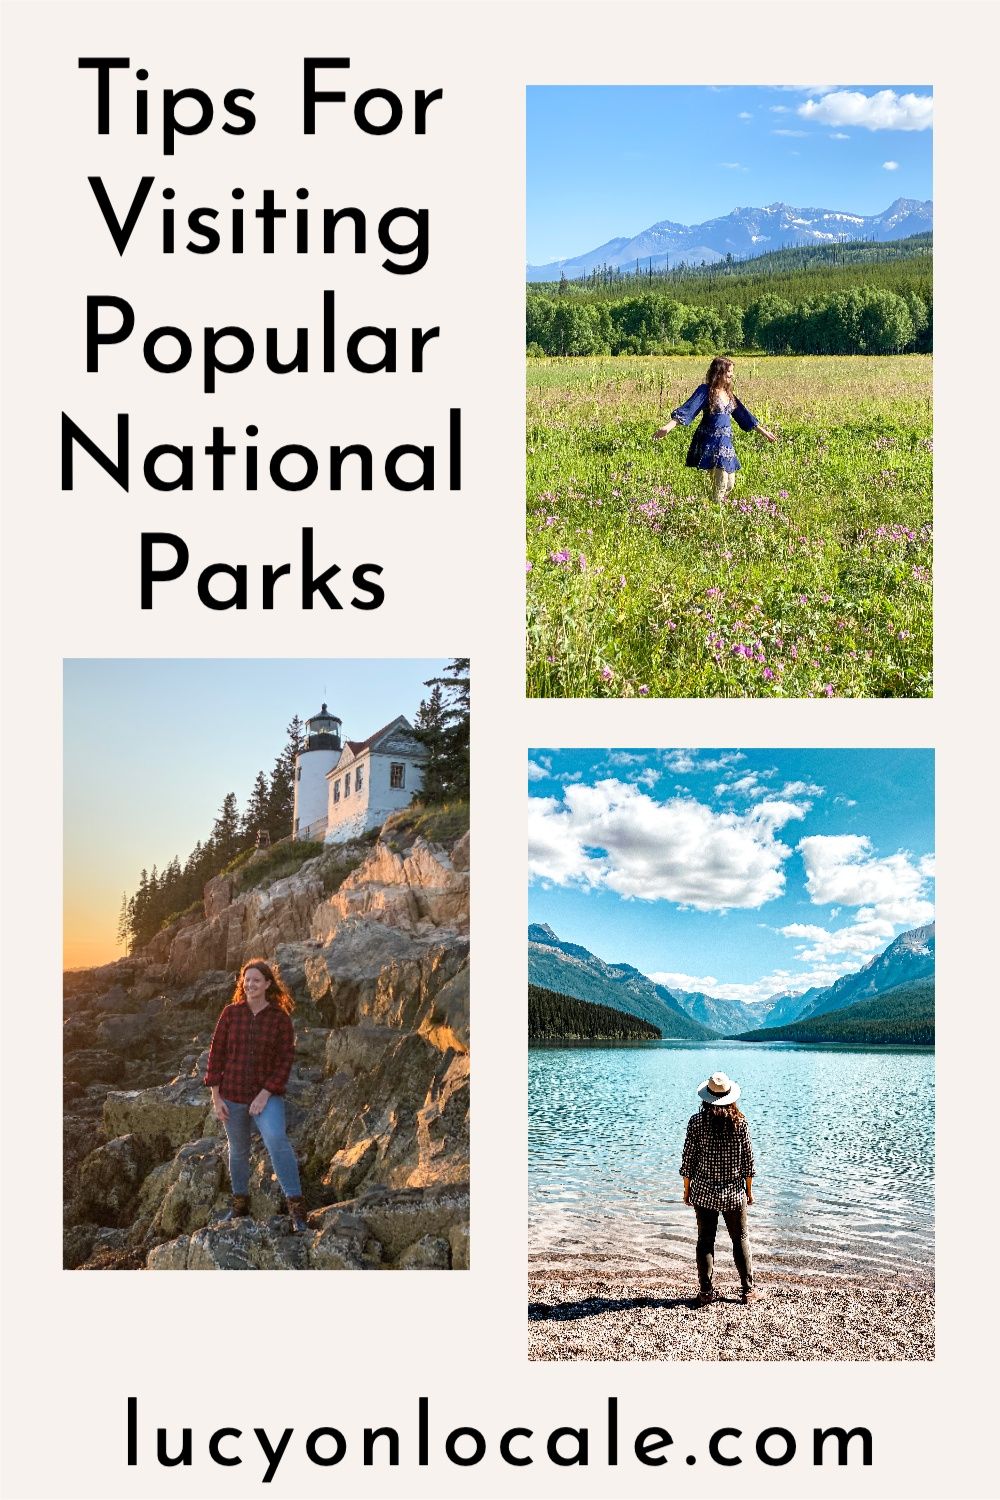 Tips for Visiting Popular National Parks